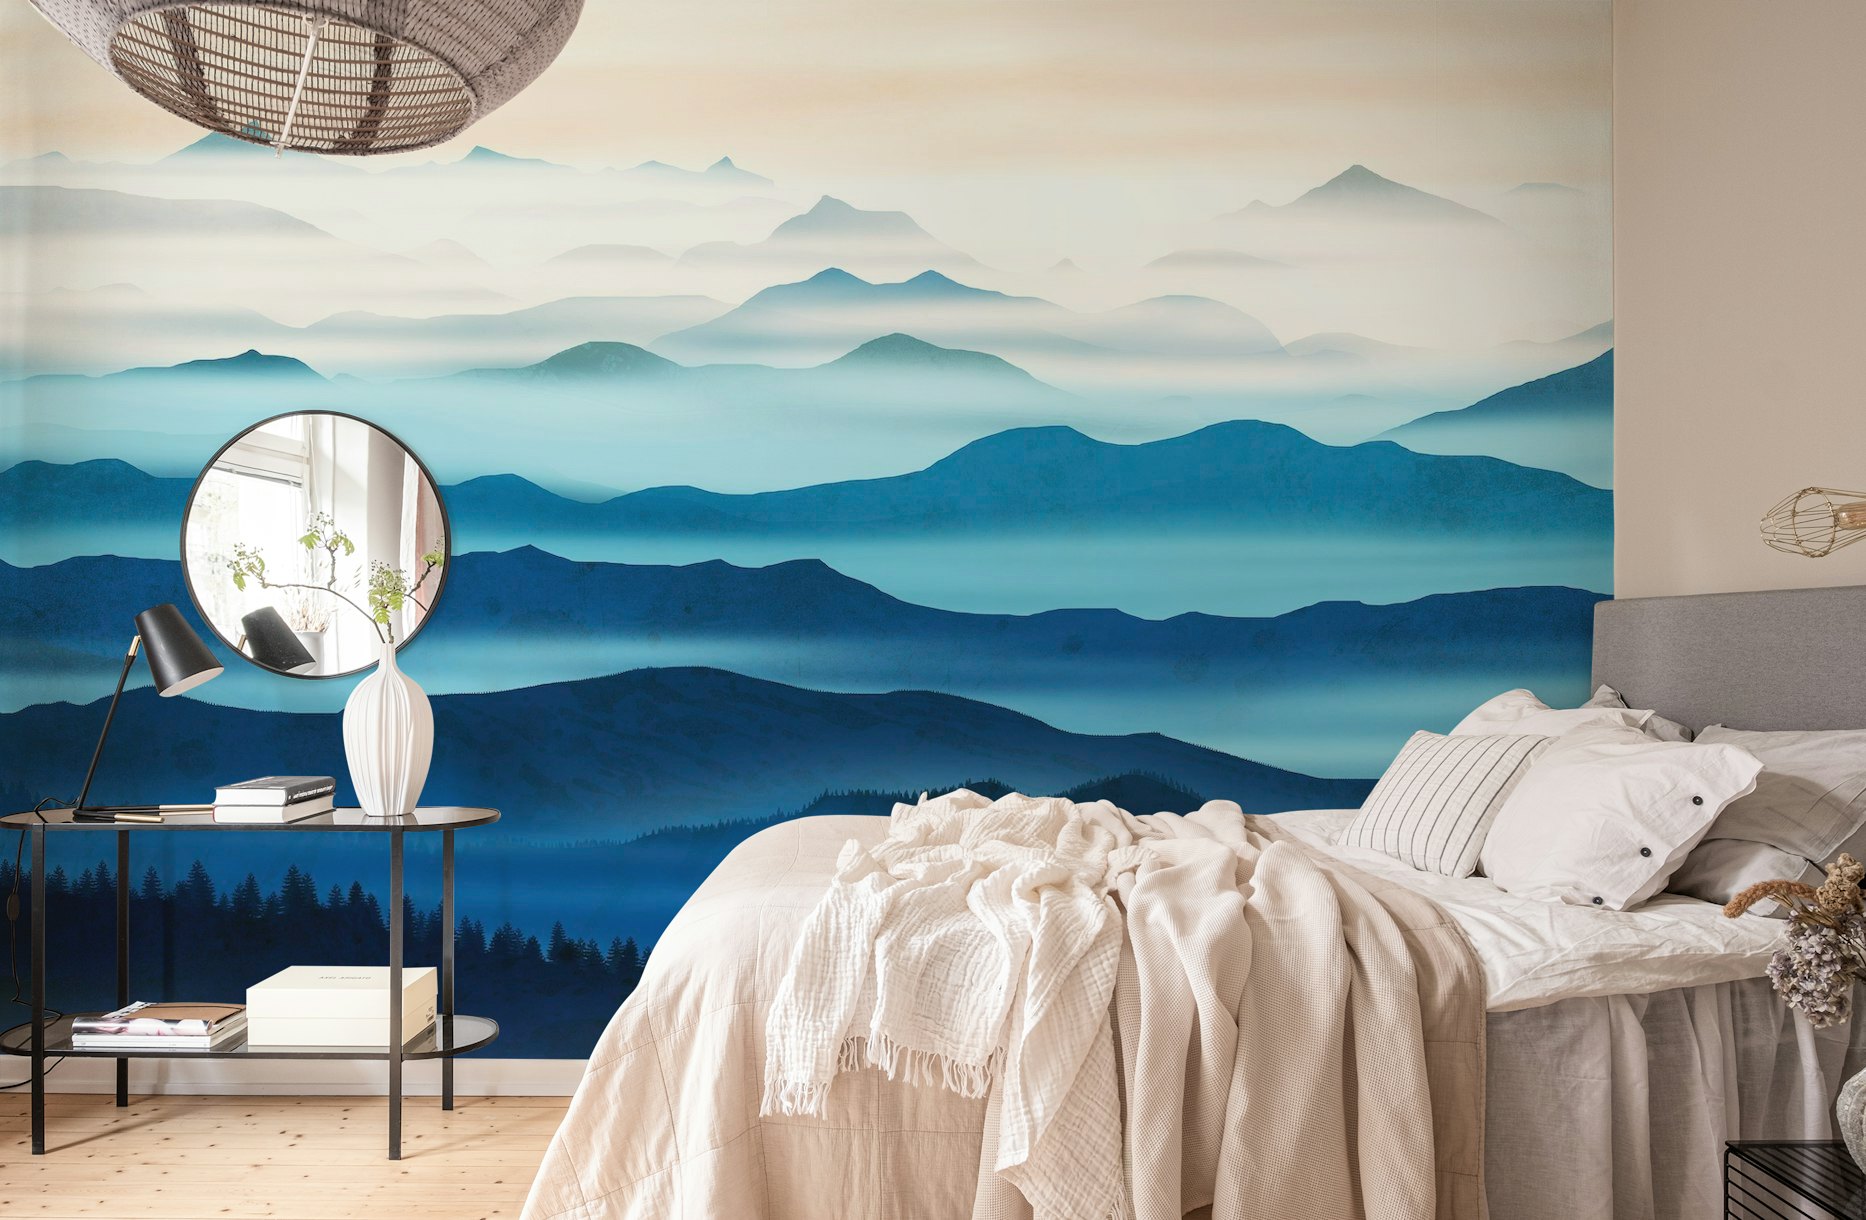 The blue valleys wallpaper